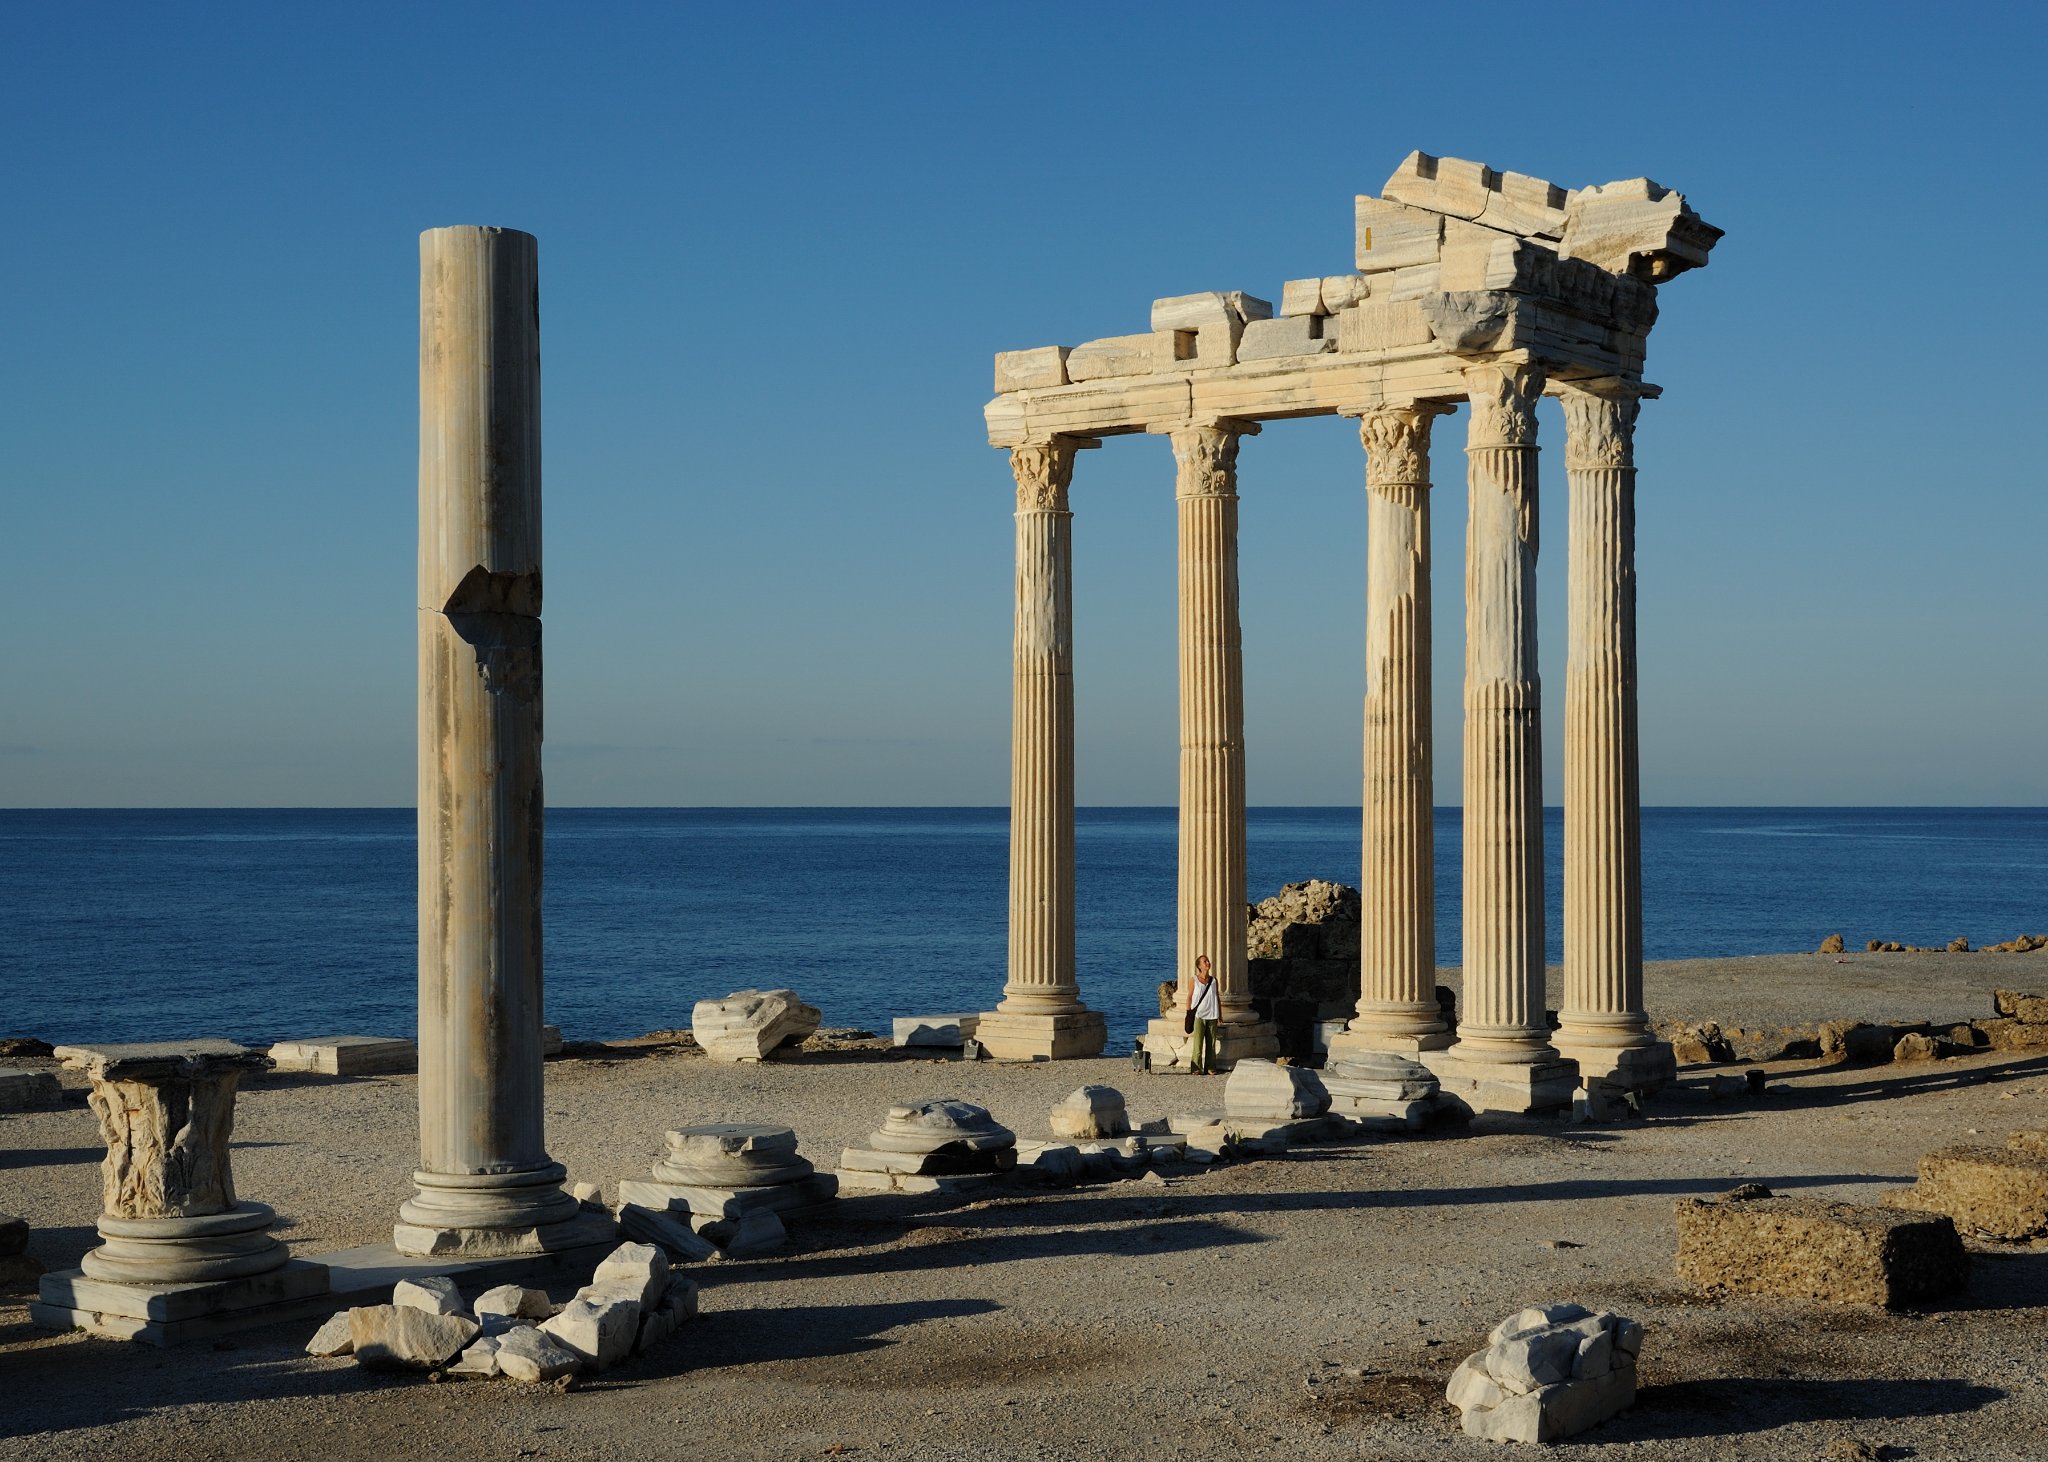 Pillars of the ancient Roman Temple of Apollo remain in Turkey's Antalya region (Credit: Saffron Blaze / Creative Commons)